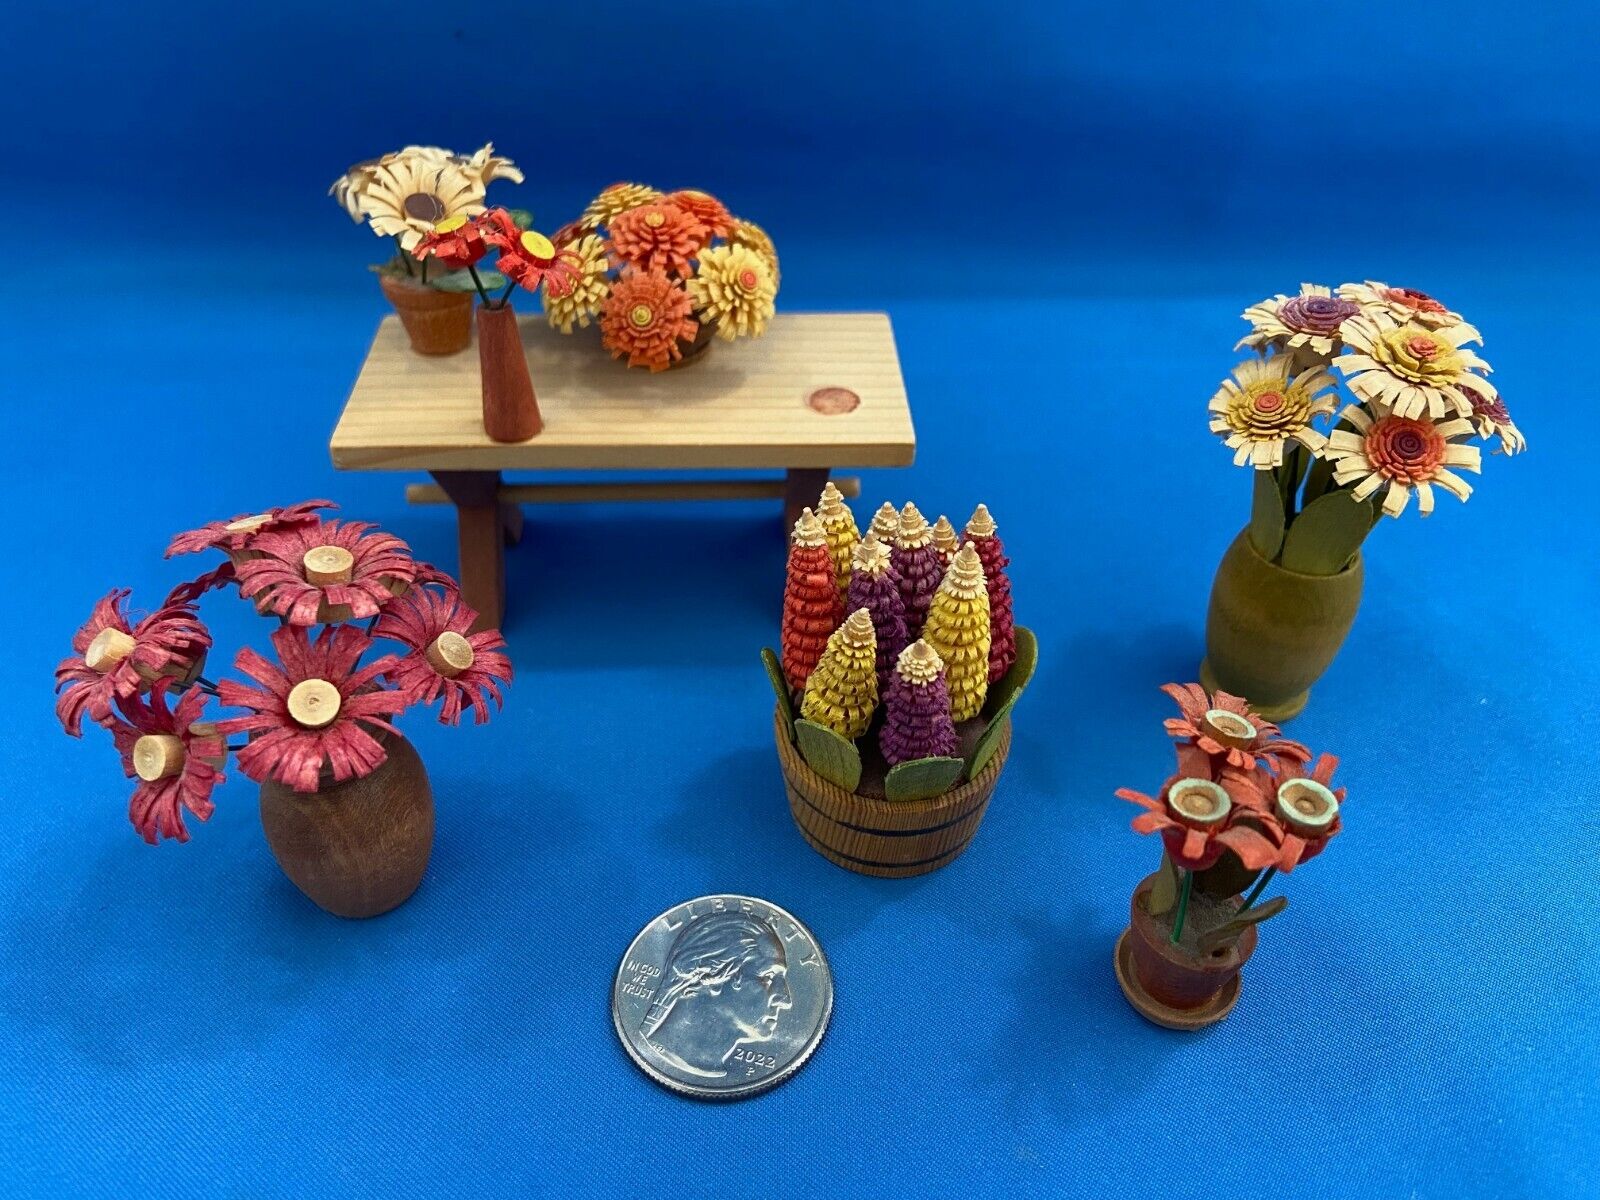 ERZGEBIRGE Miniature Flowers and Table Wood Vintage Germany Leichsenring Dregeno